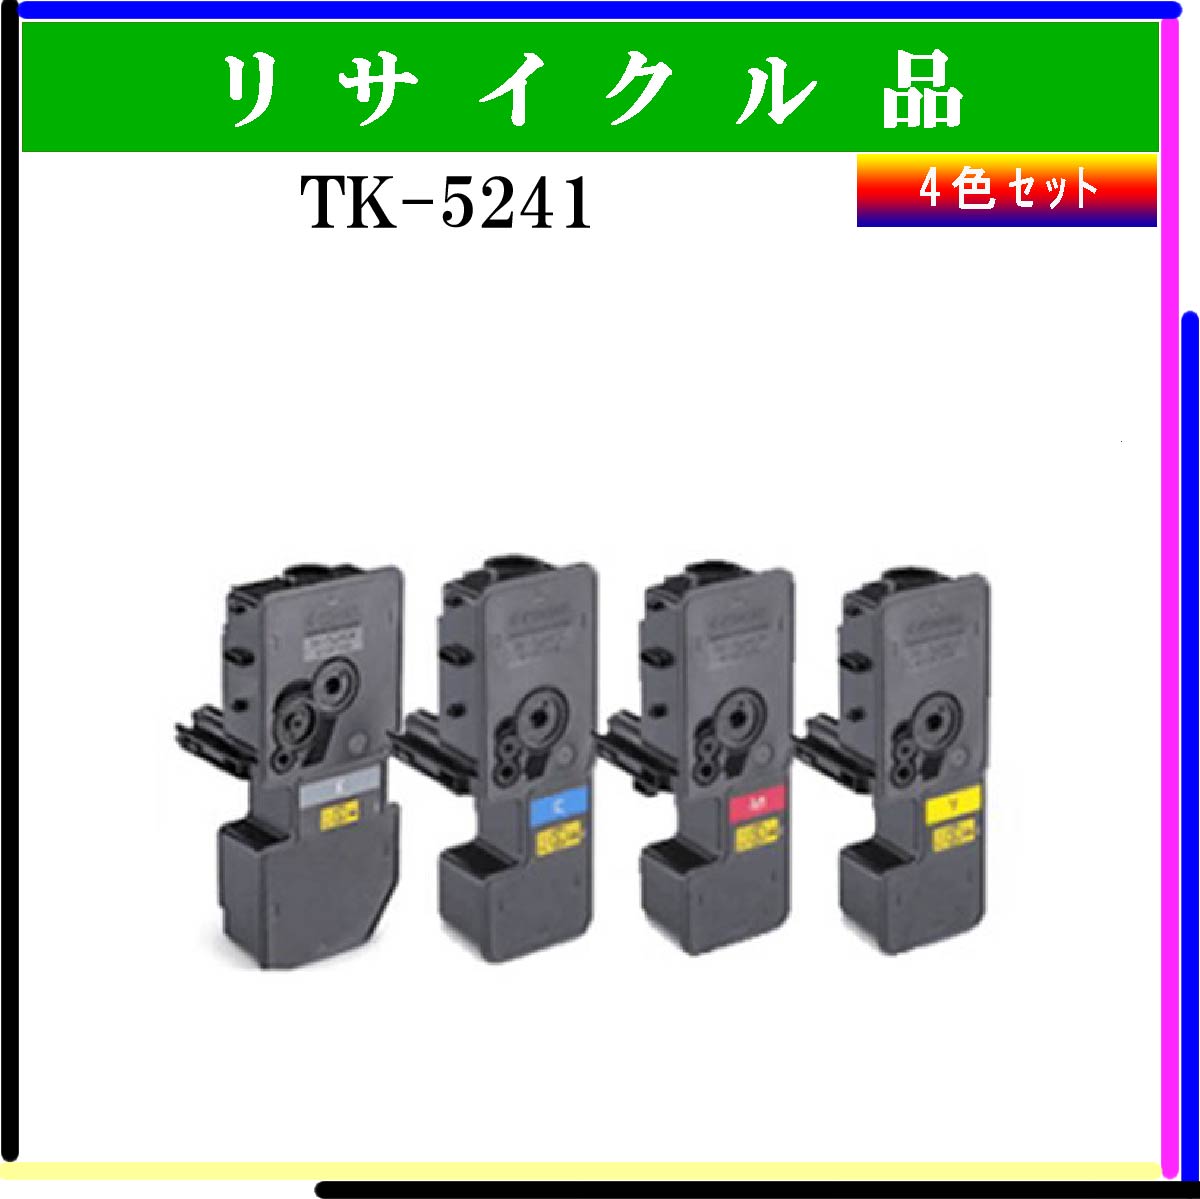 TK-5241 (4色ｾｯﾄ) - ウインドウを閉じる